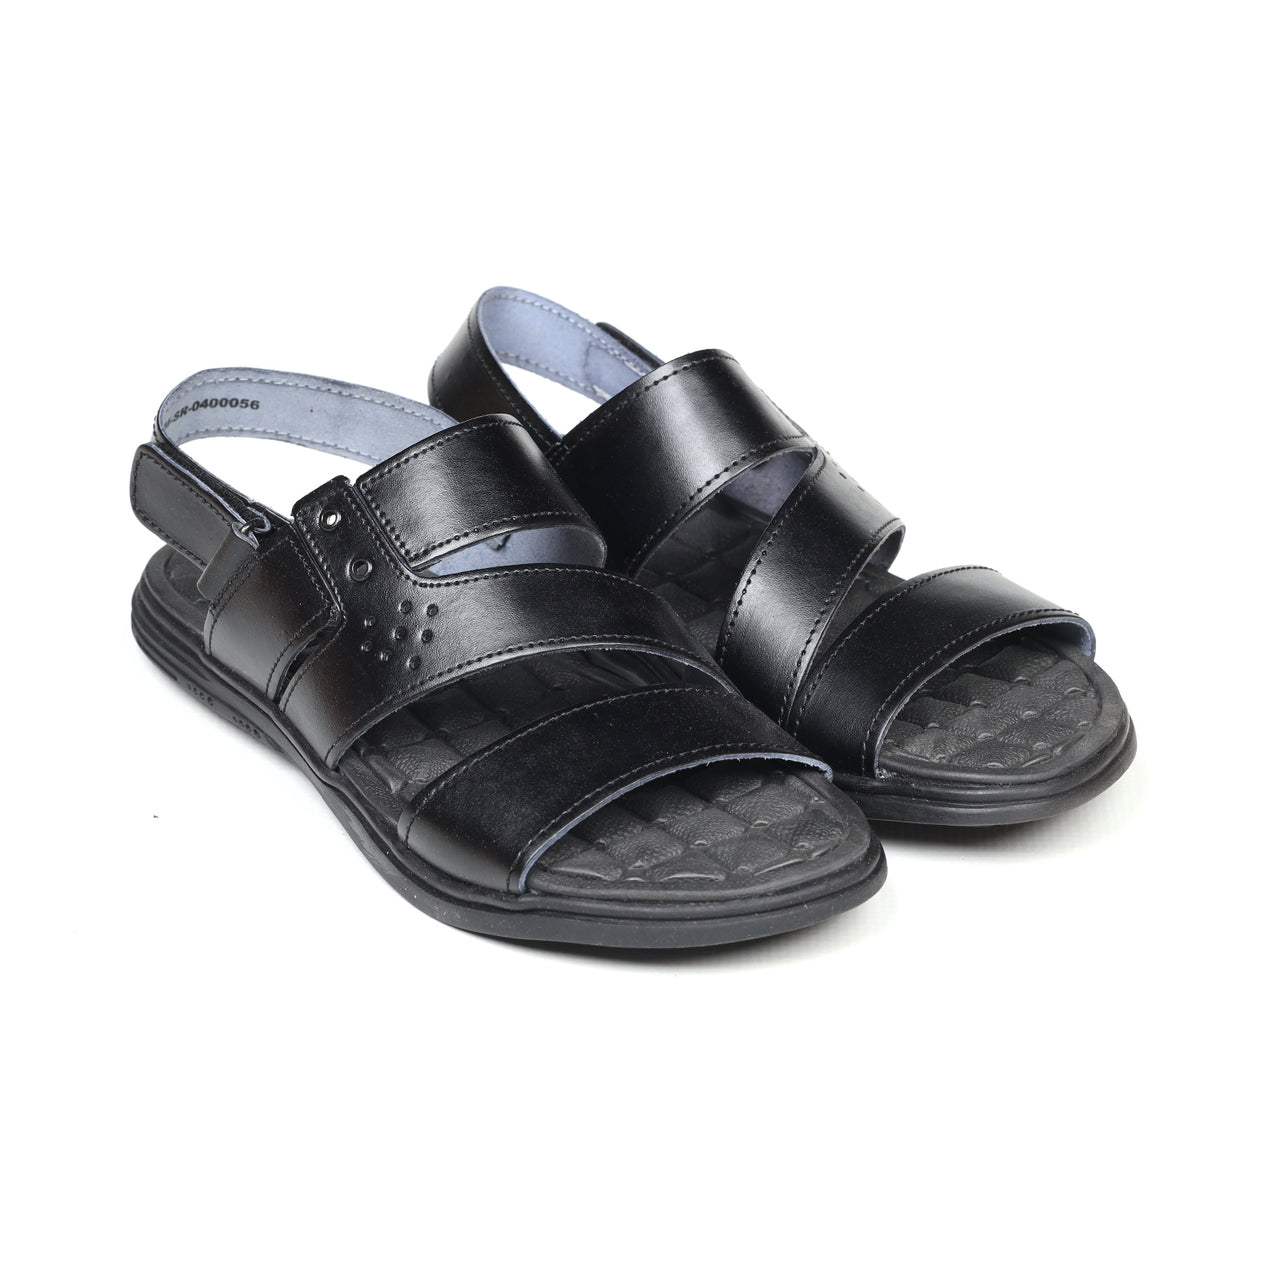 m-sr-0400056-casual sandal